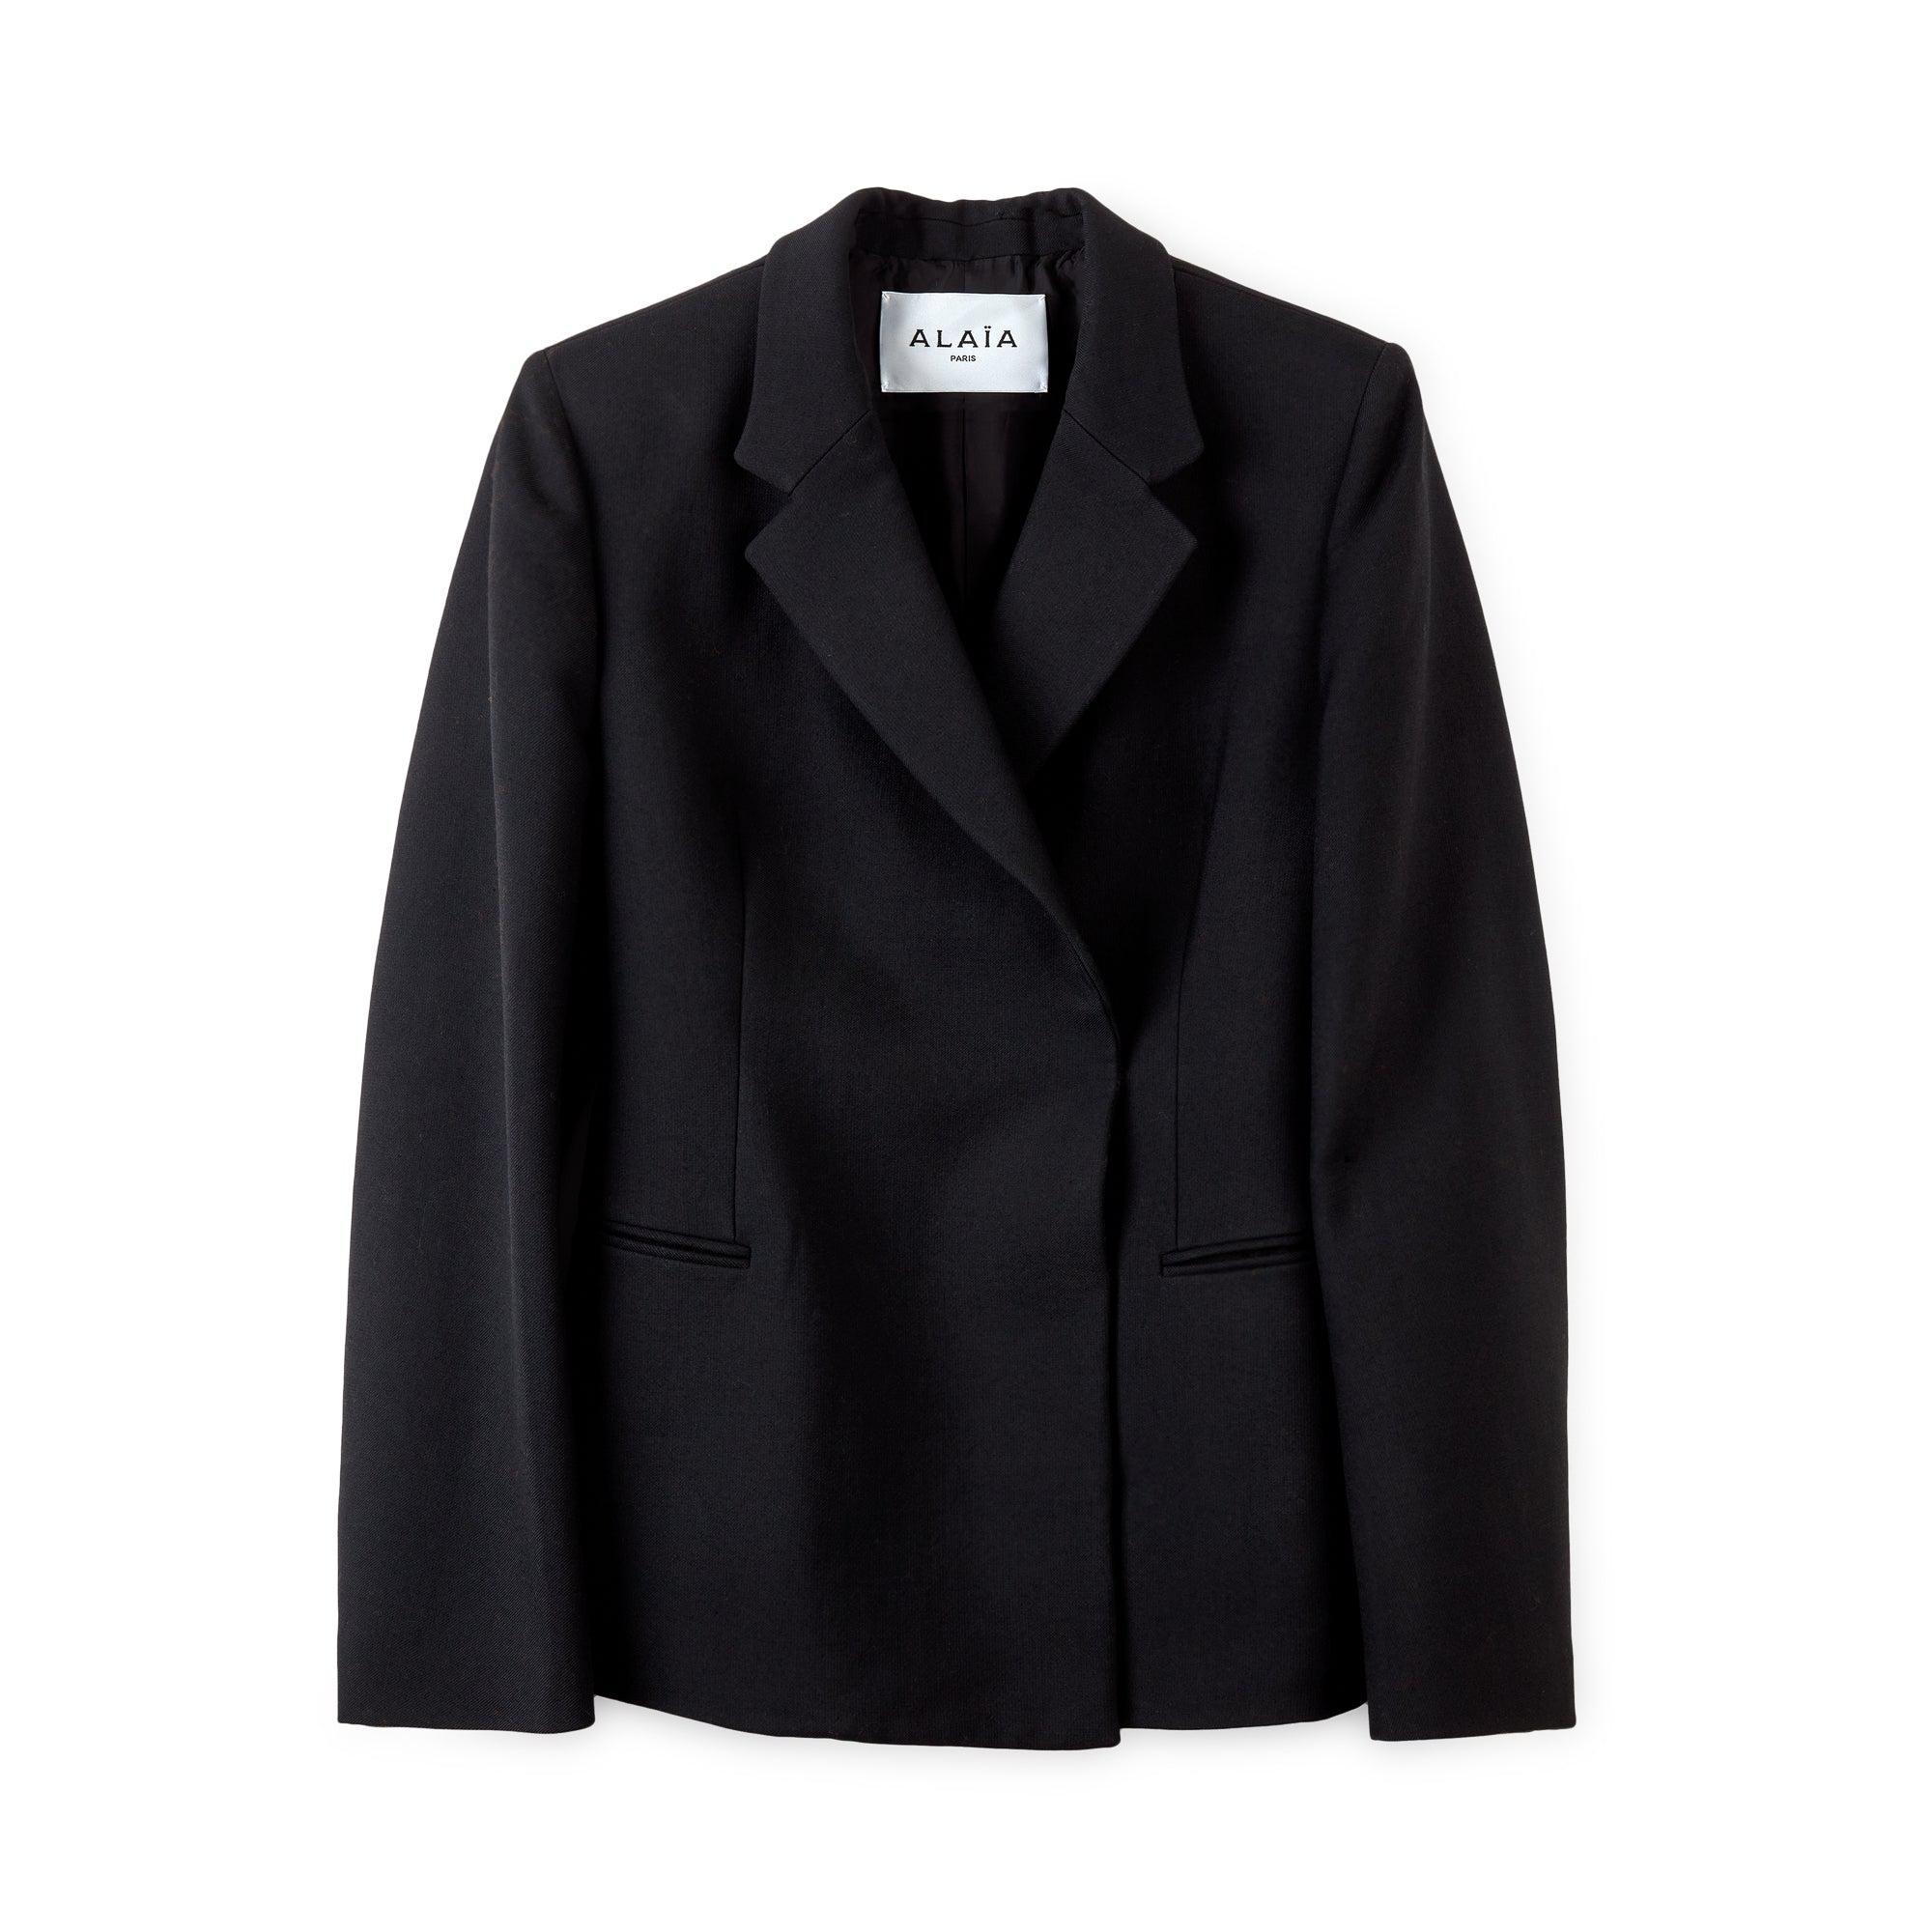 ALAÏA Women's Veste A Fitted Tailored Jacket (Black) by AZZEDINE ALAIA